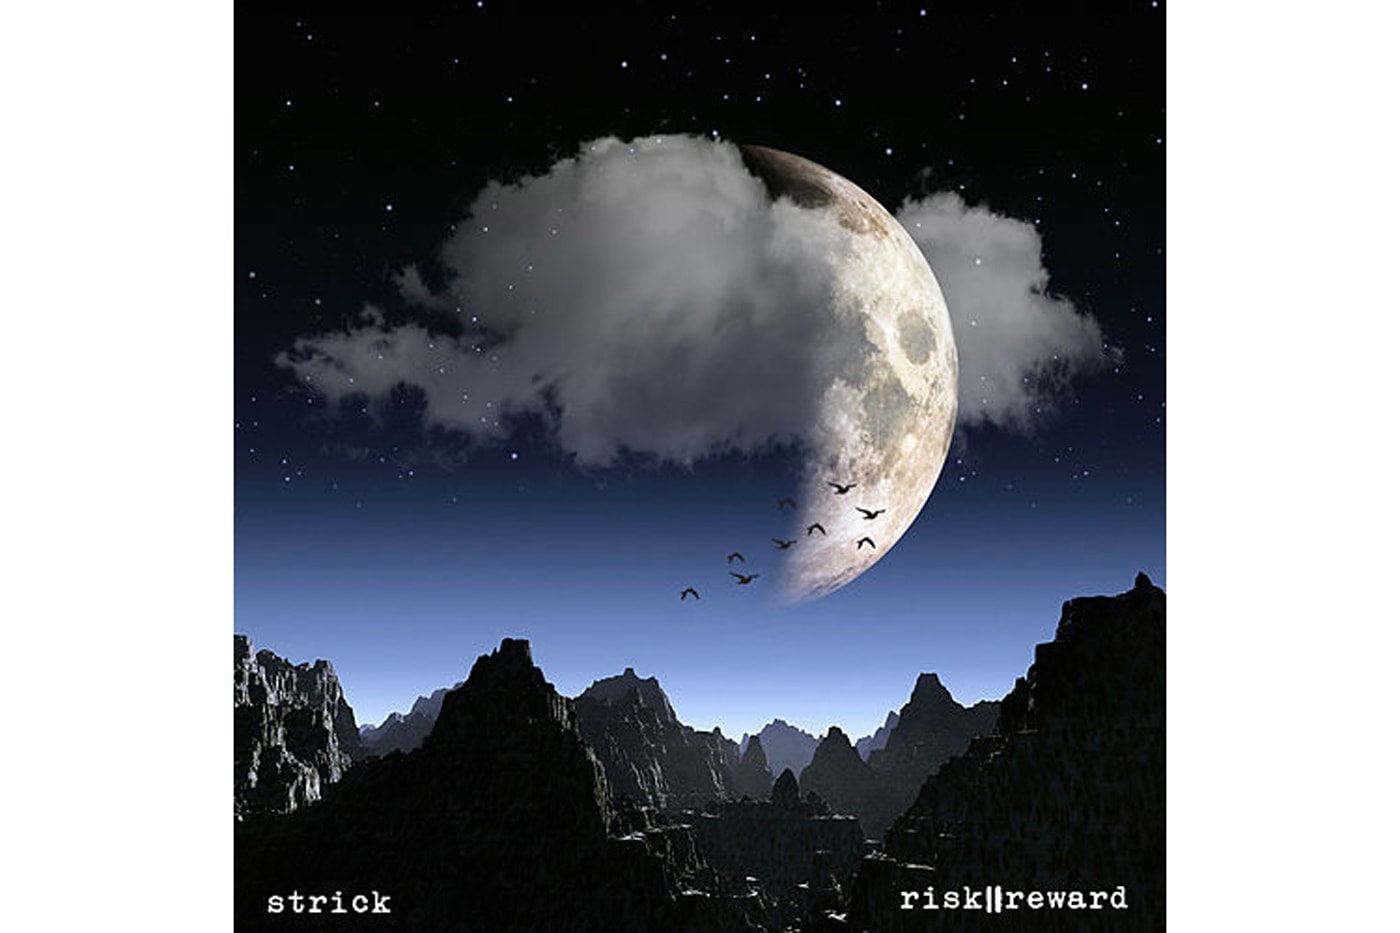 YSL Strick Risk Reward 2 Album Stream